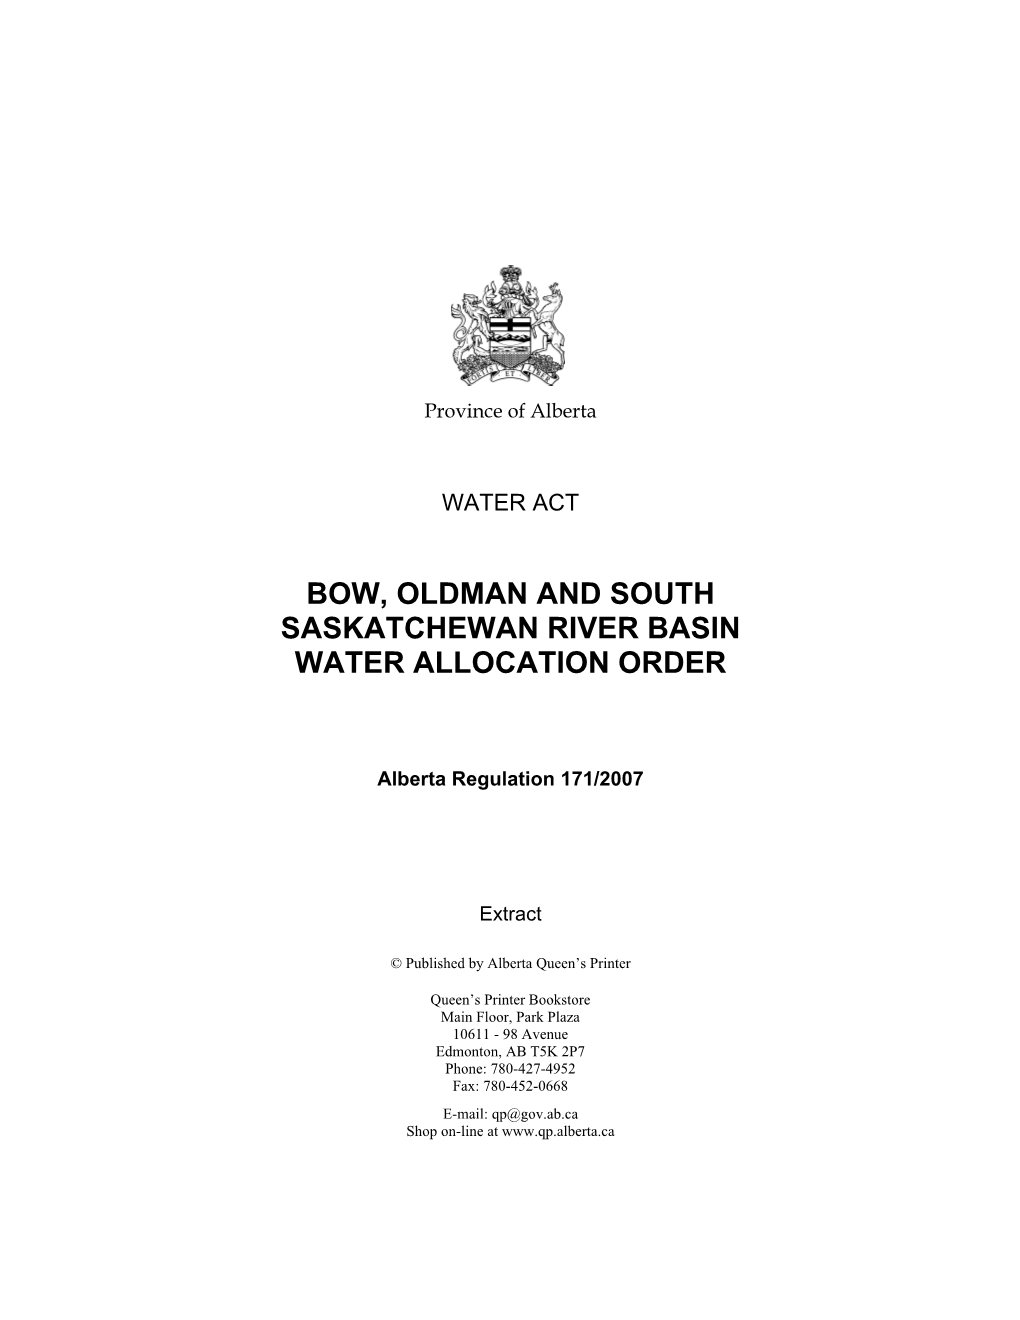 Bow, Oldman and South Saskatchewan River Basin Water Allocation Order